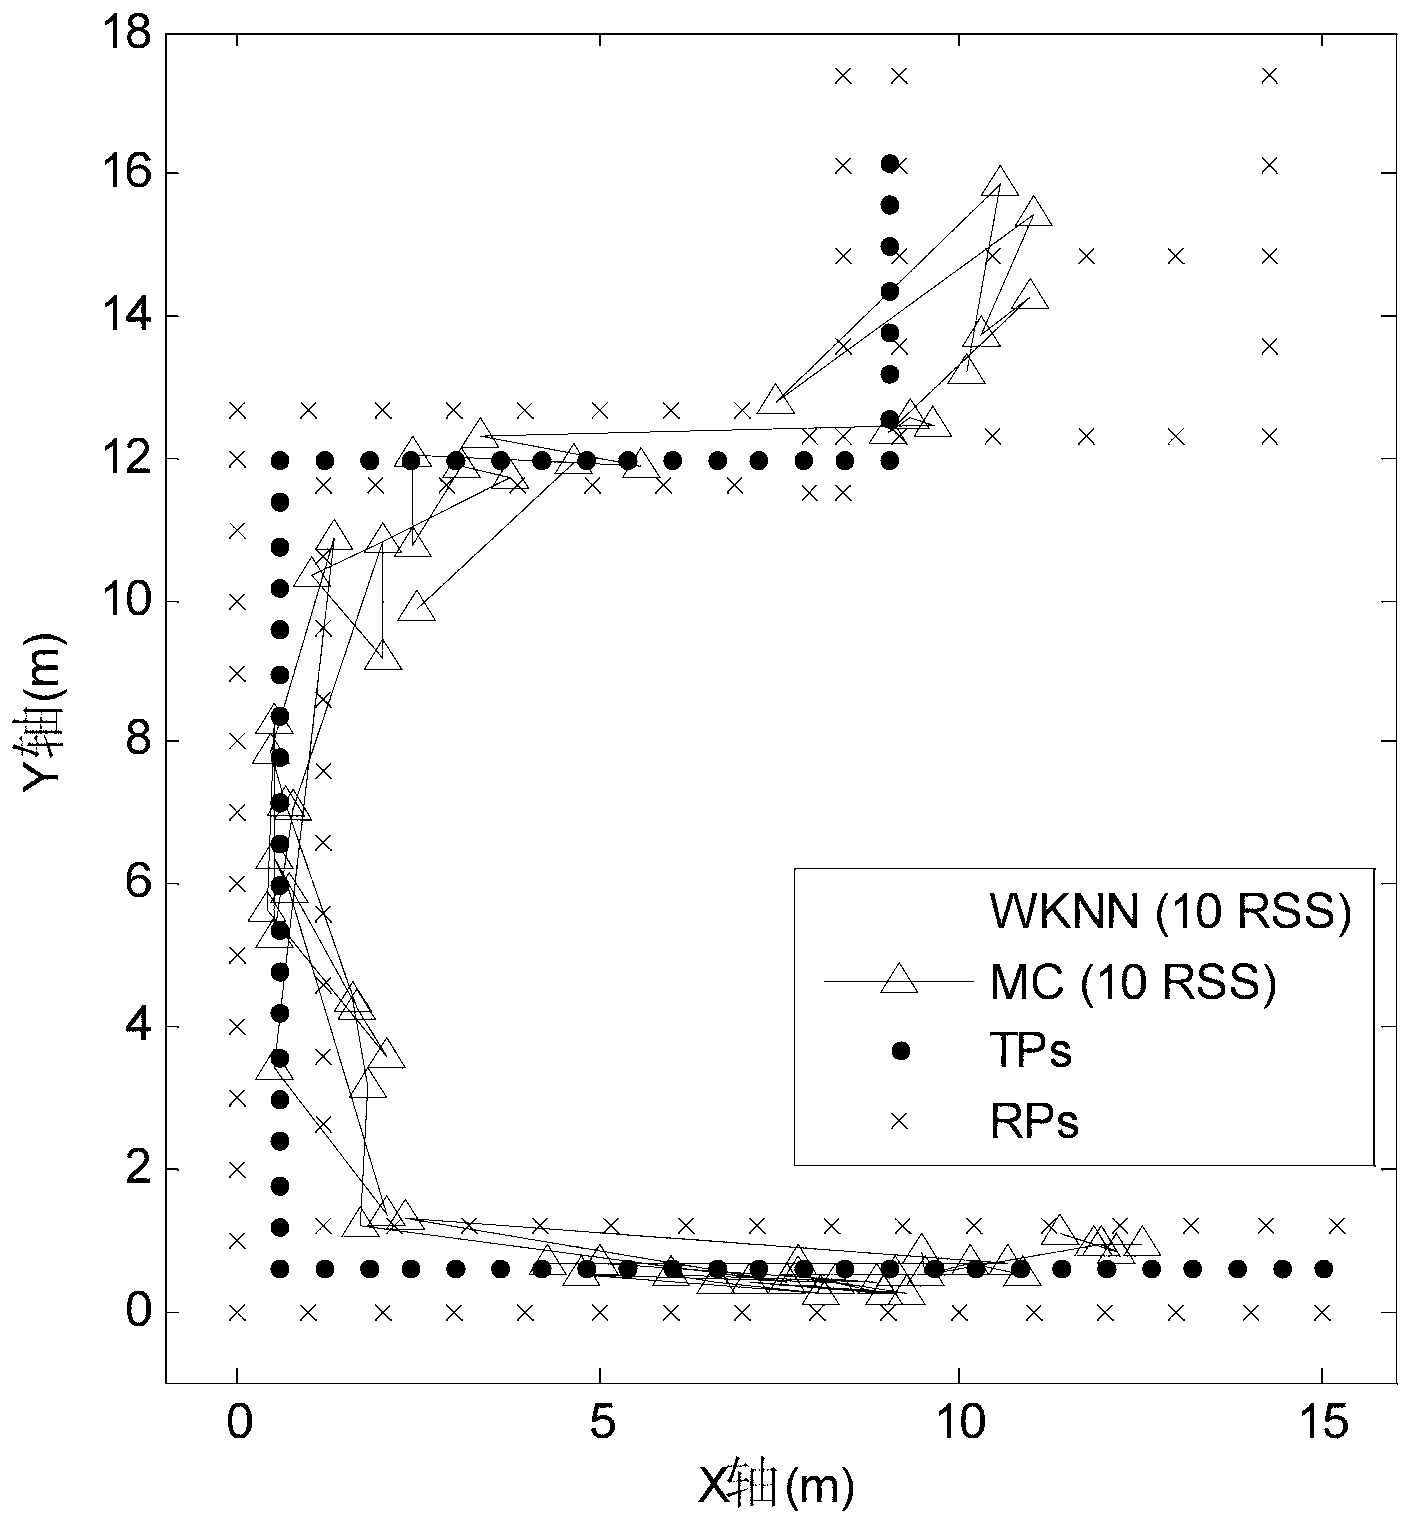 WLAN indoor positioning method based on matrix correlation